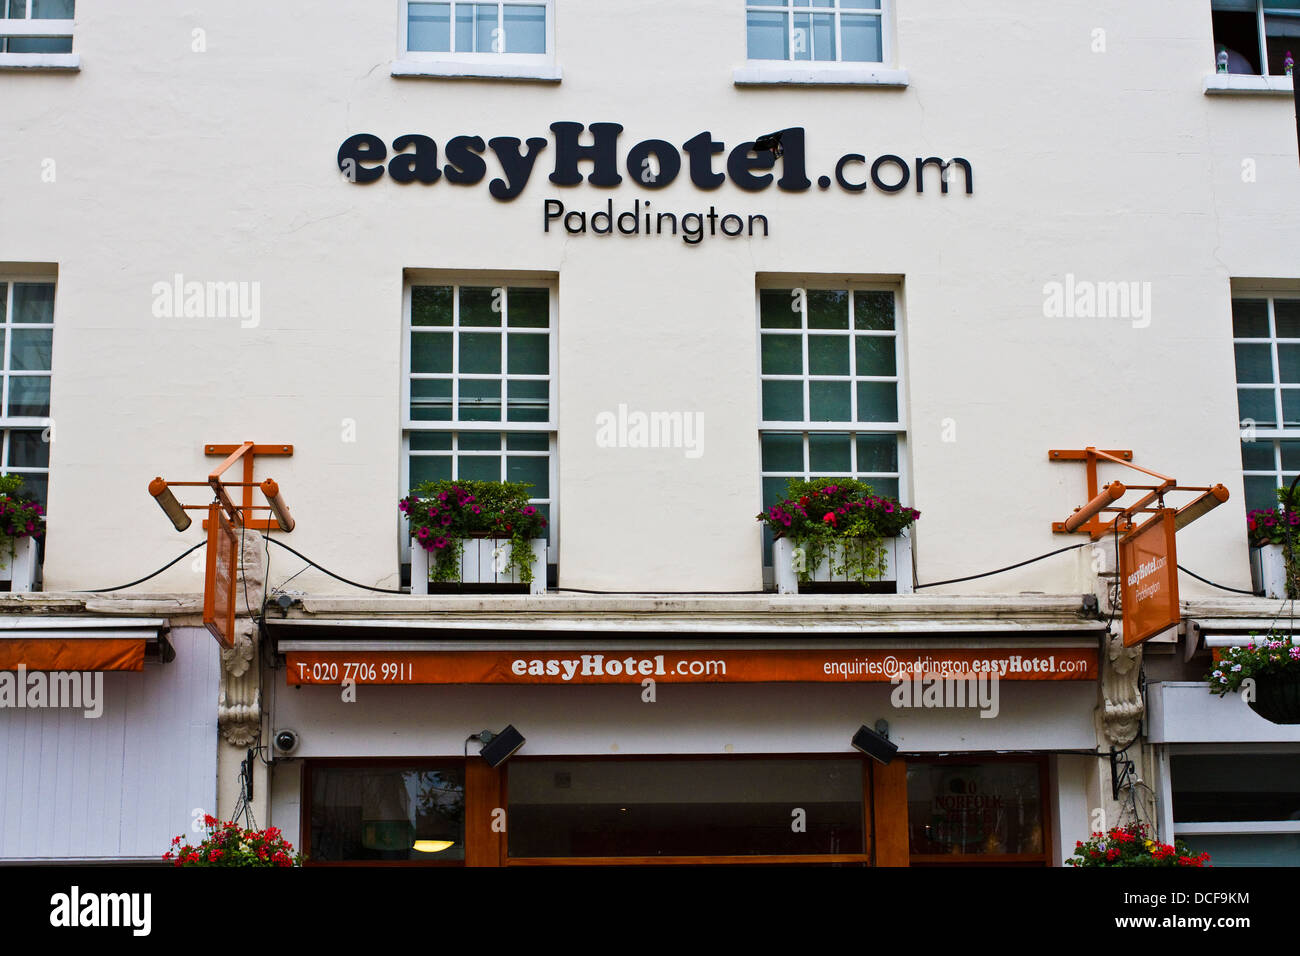 Facile Hotel.com a Paddington, Londra Foto Stock